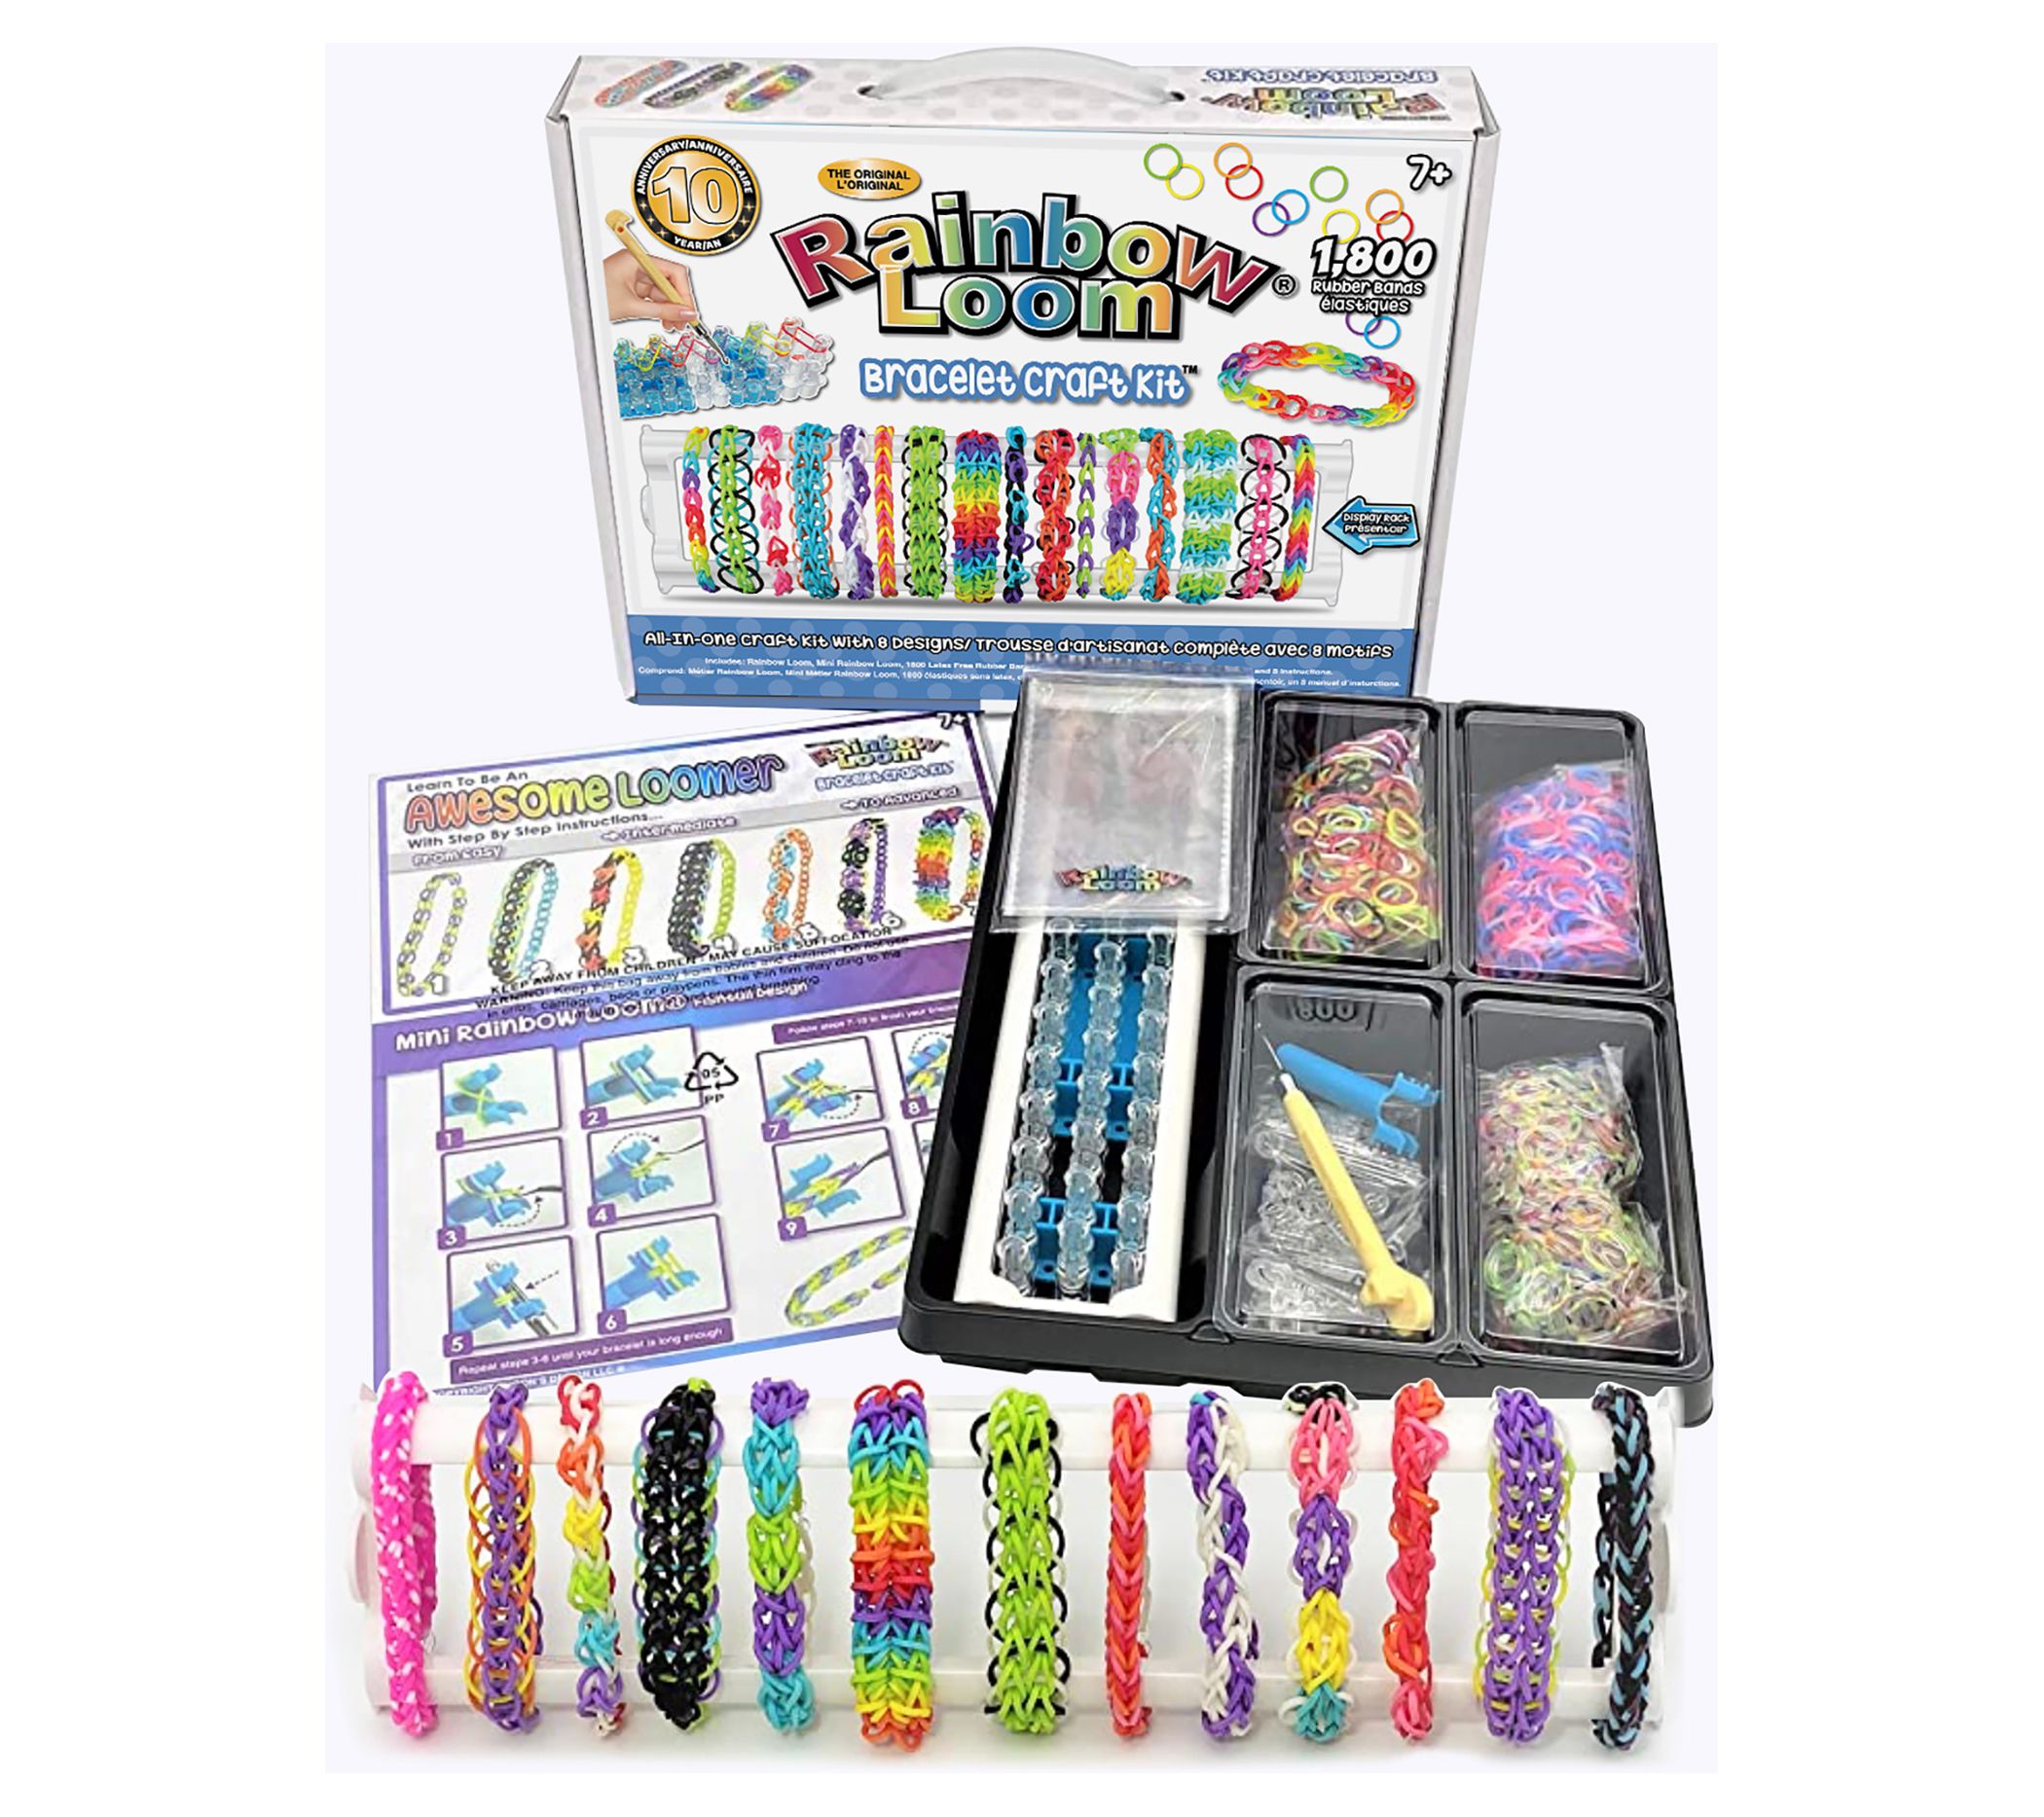 Rainbow Loom rubber band bracelets the latest fad among kids and